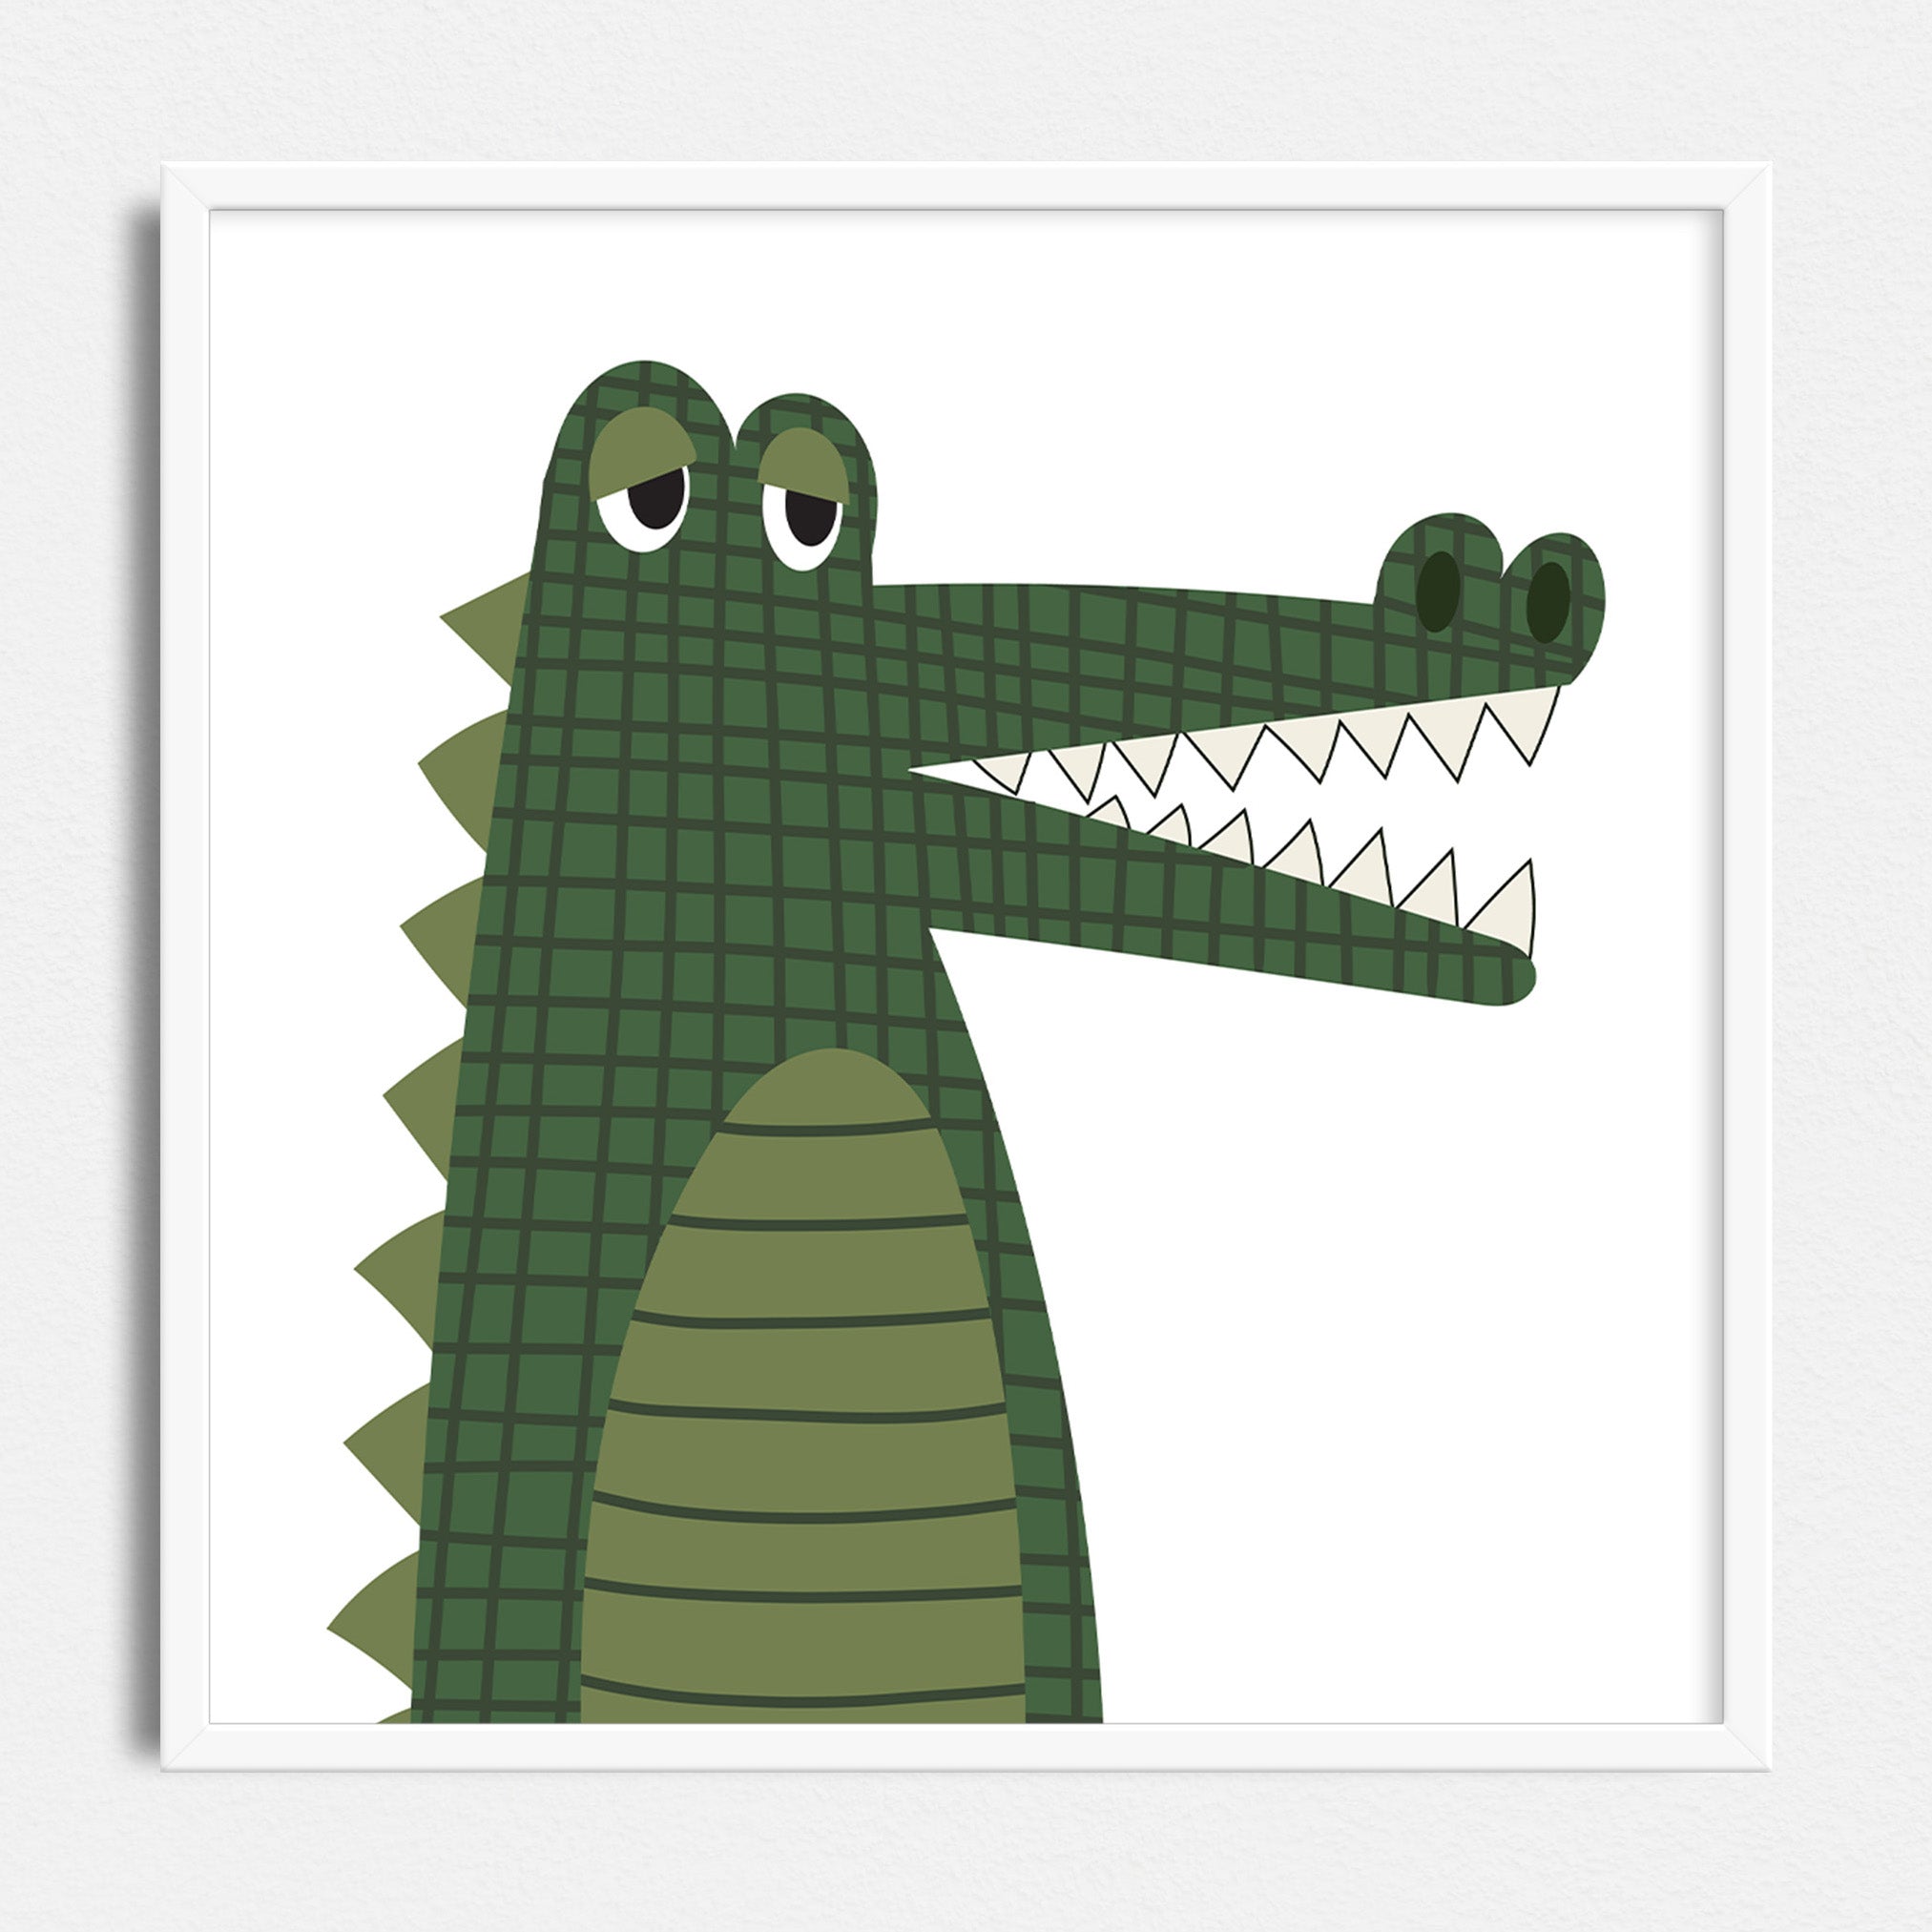 Cheerful Cartoon Crocodile - Fun, Vibrant, Kid-friendly Design